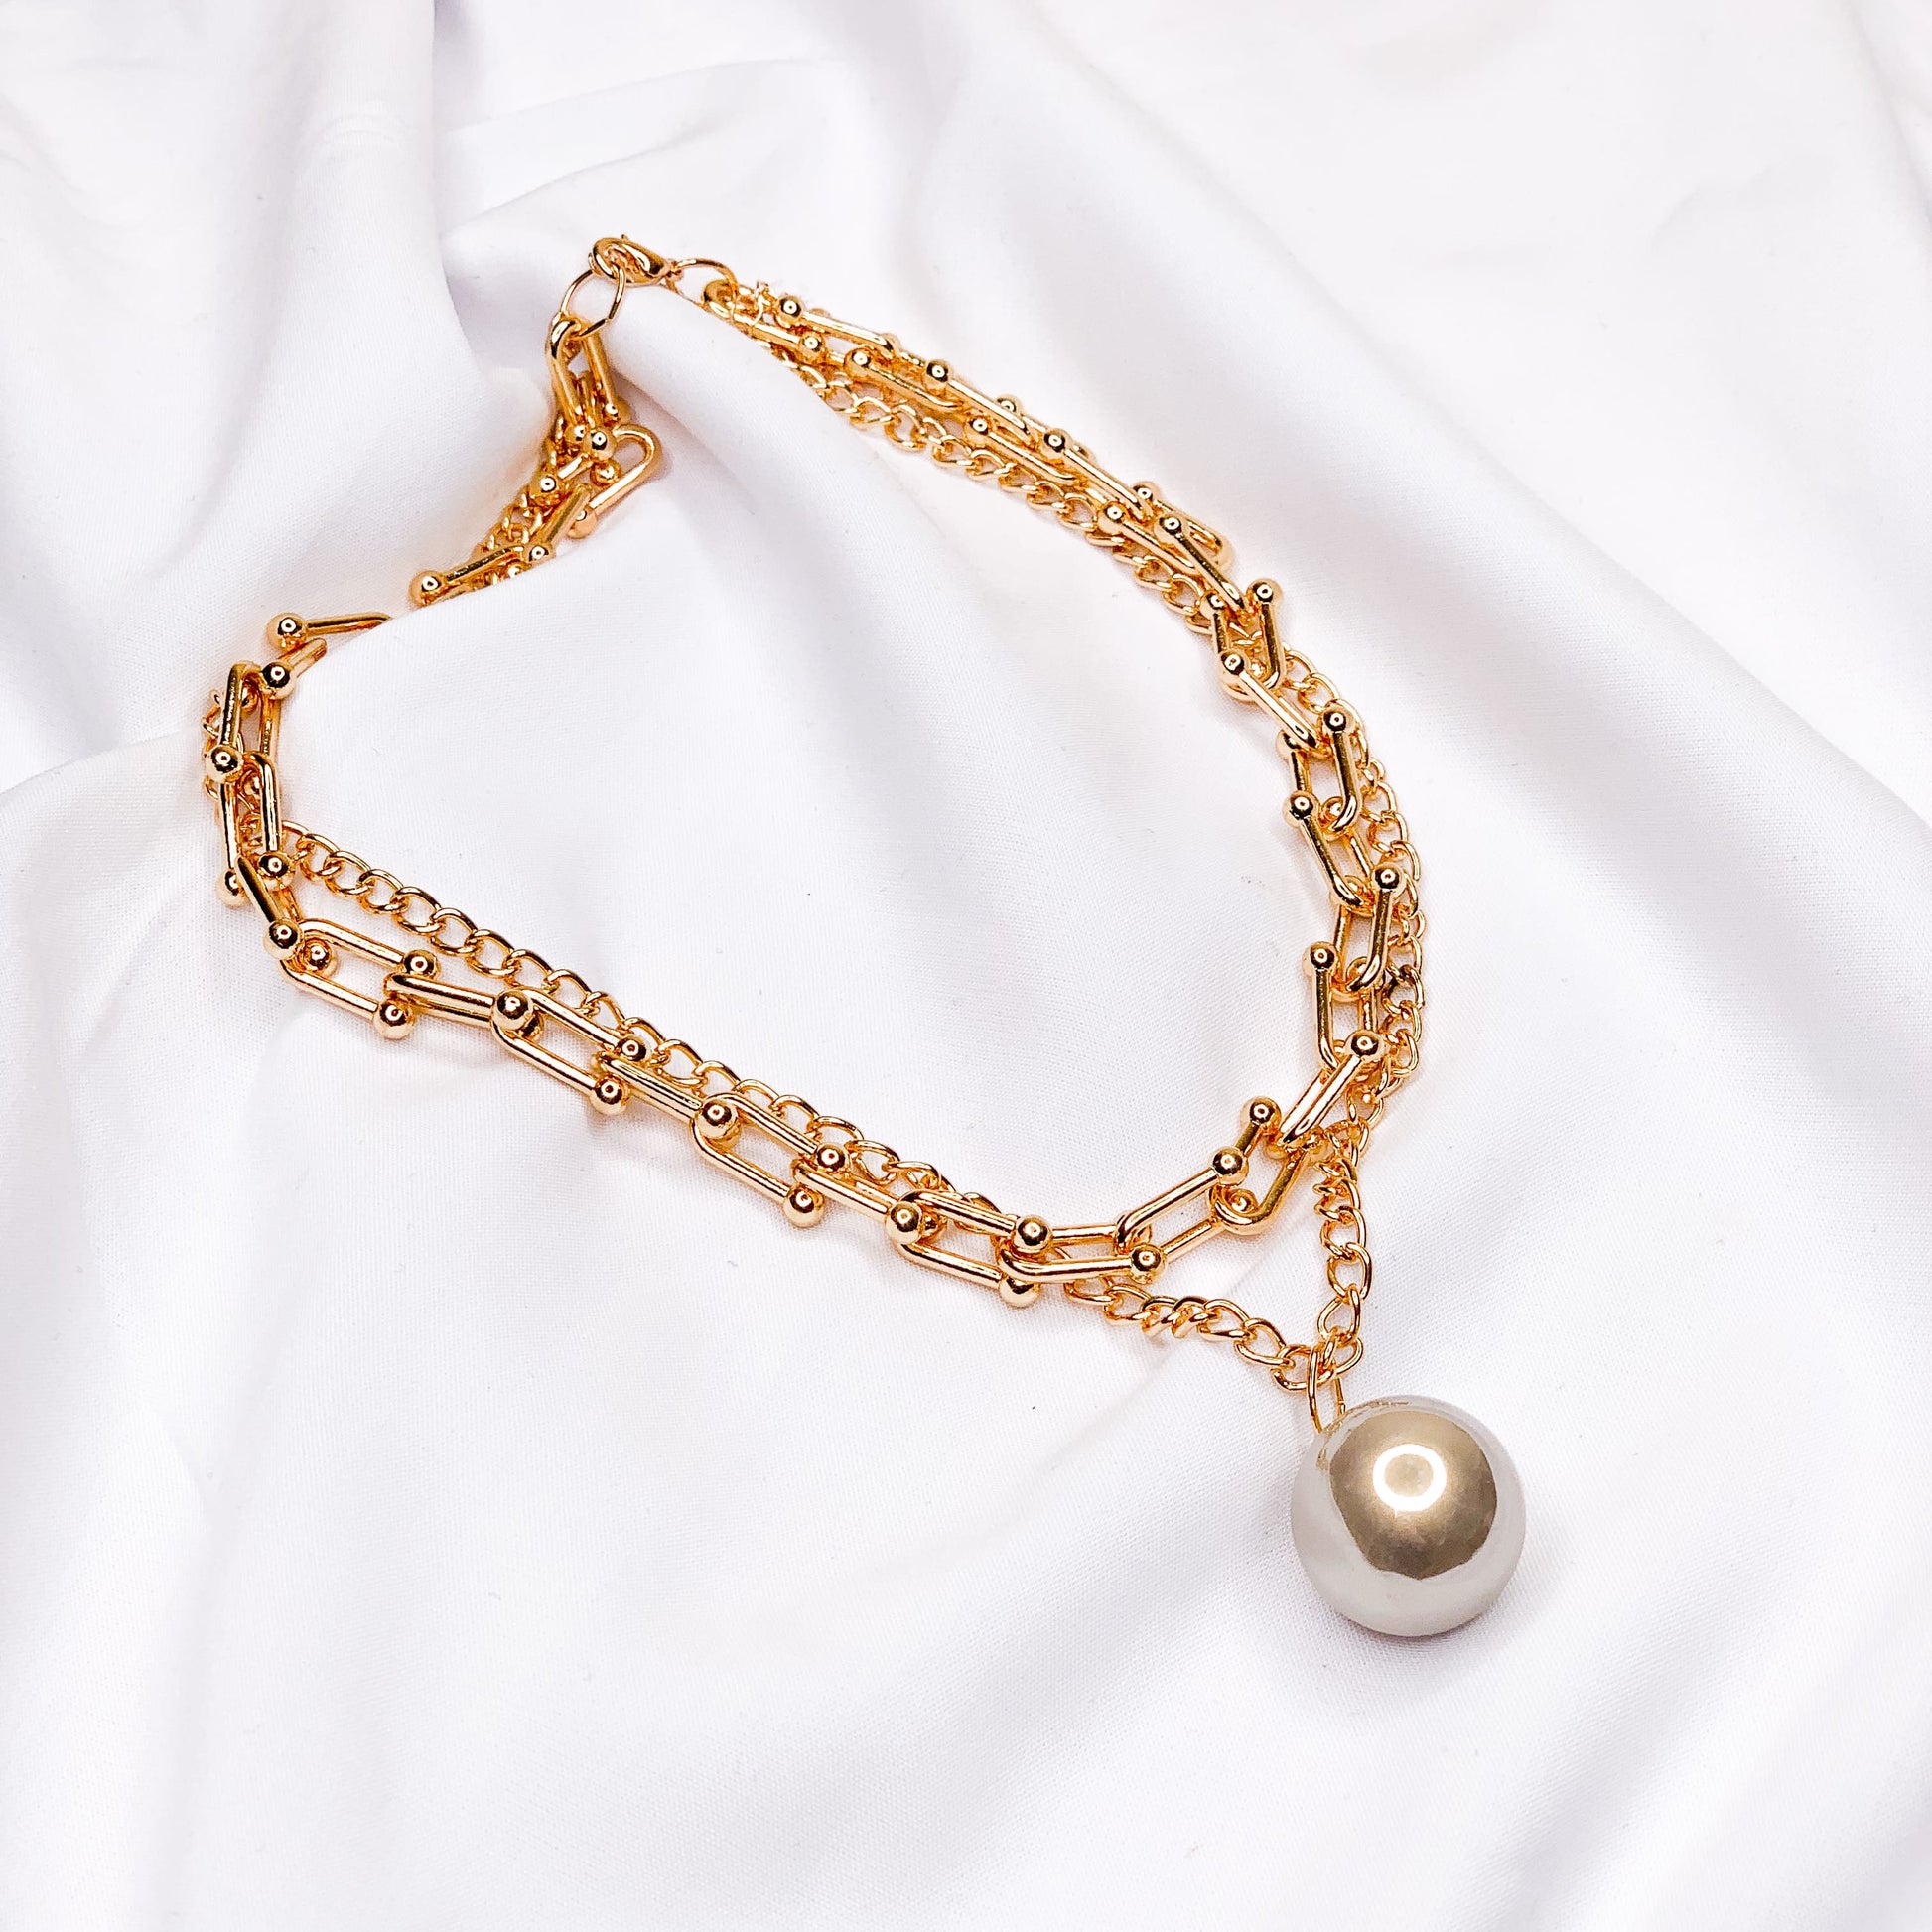 Hellen.V - Gold Necklaces & Chain & Ball Pendant